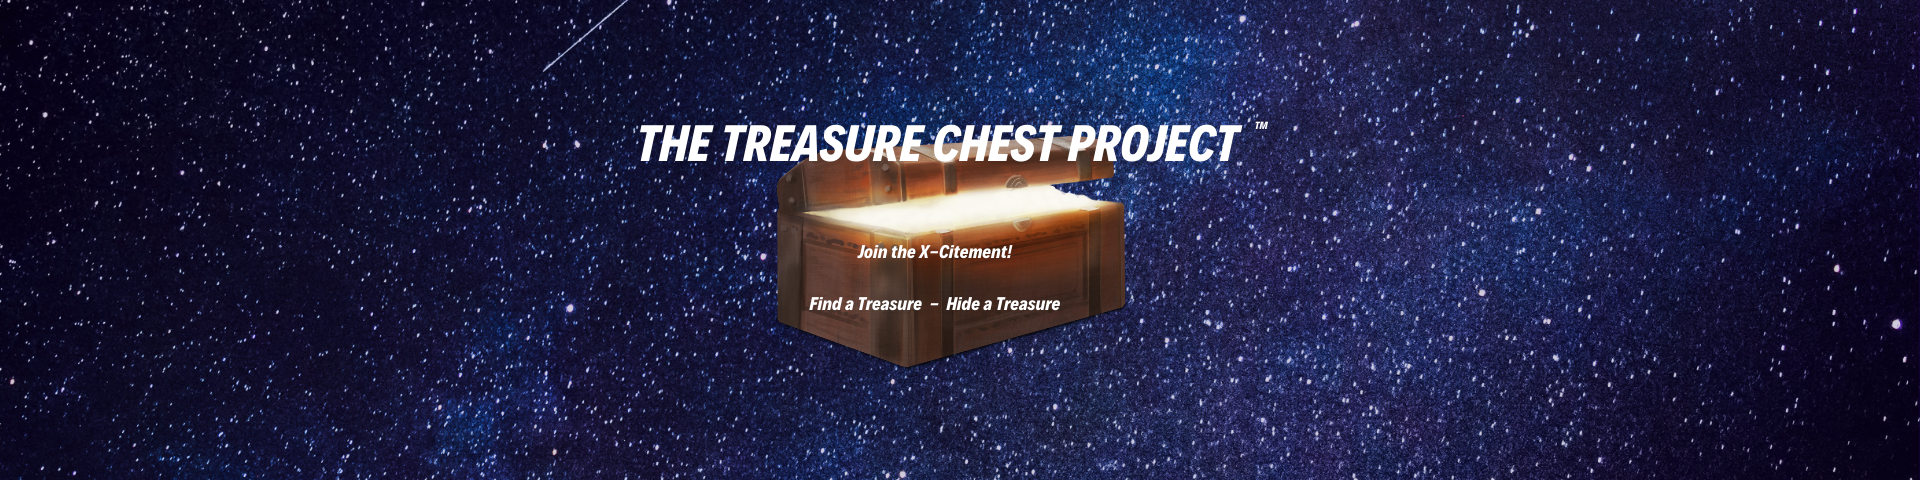 The Treasure Chest Project